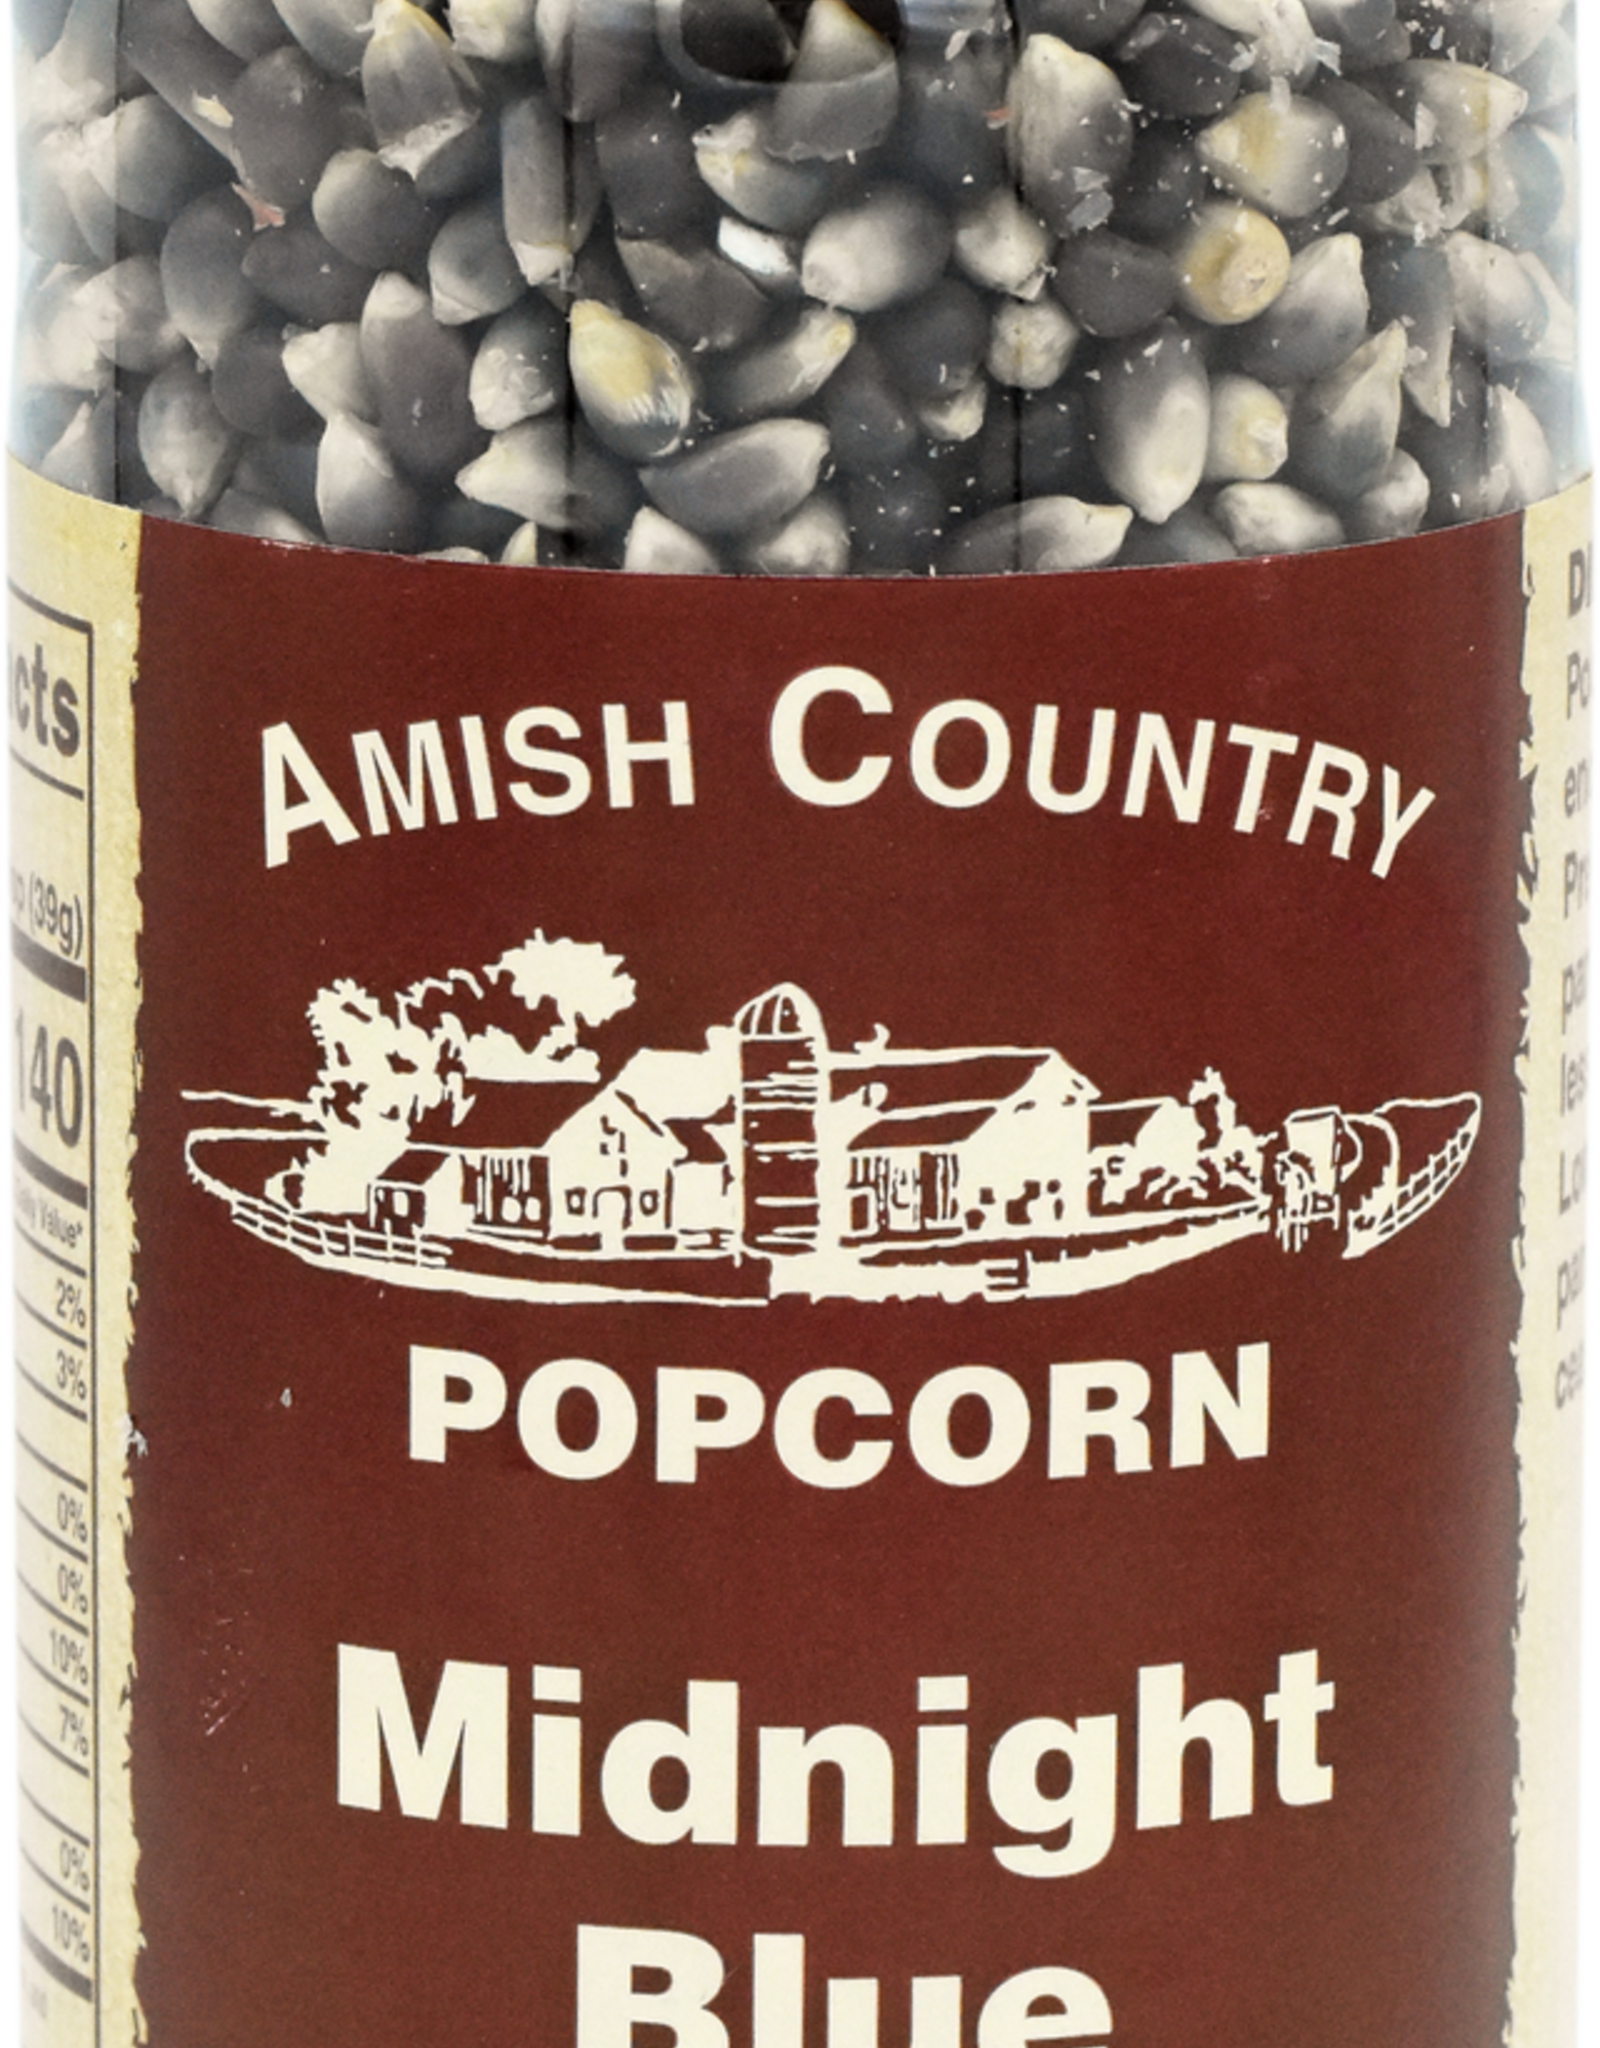 Kitchen Amish Country - Midnight Blue Popcorn Kernels 14 oz Bottle